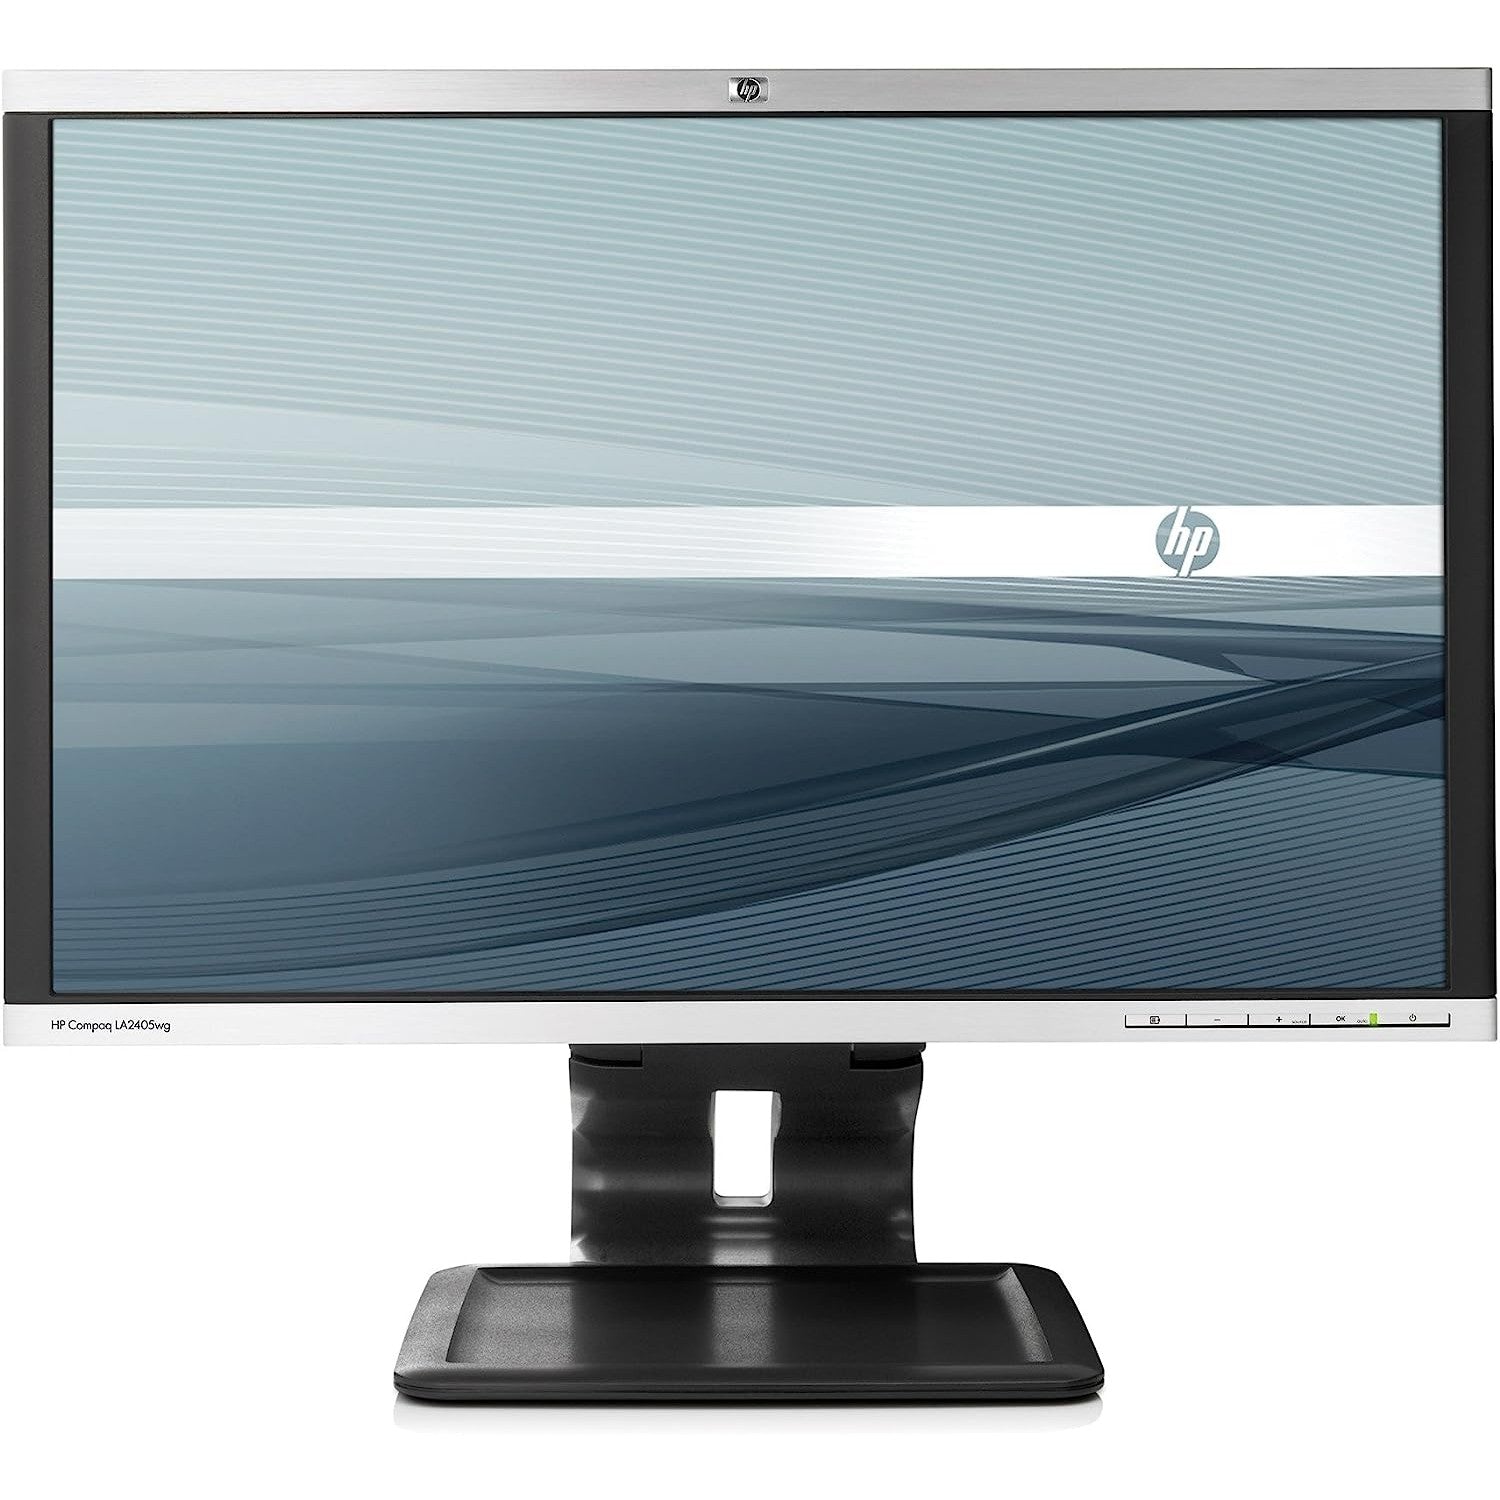 HP LA2405WG 24" Widescreen LCD Monitor - Black - Refurbished Excellent